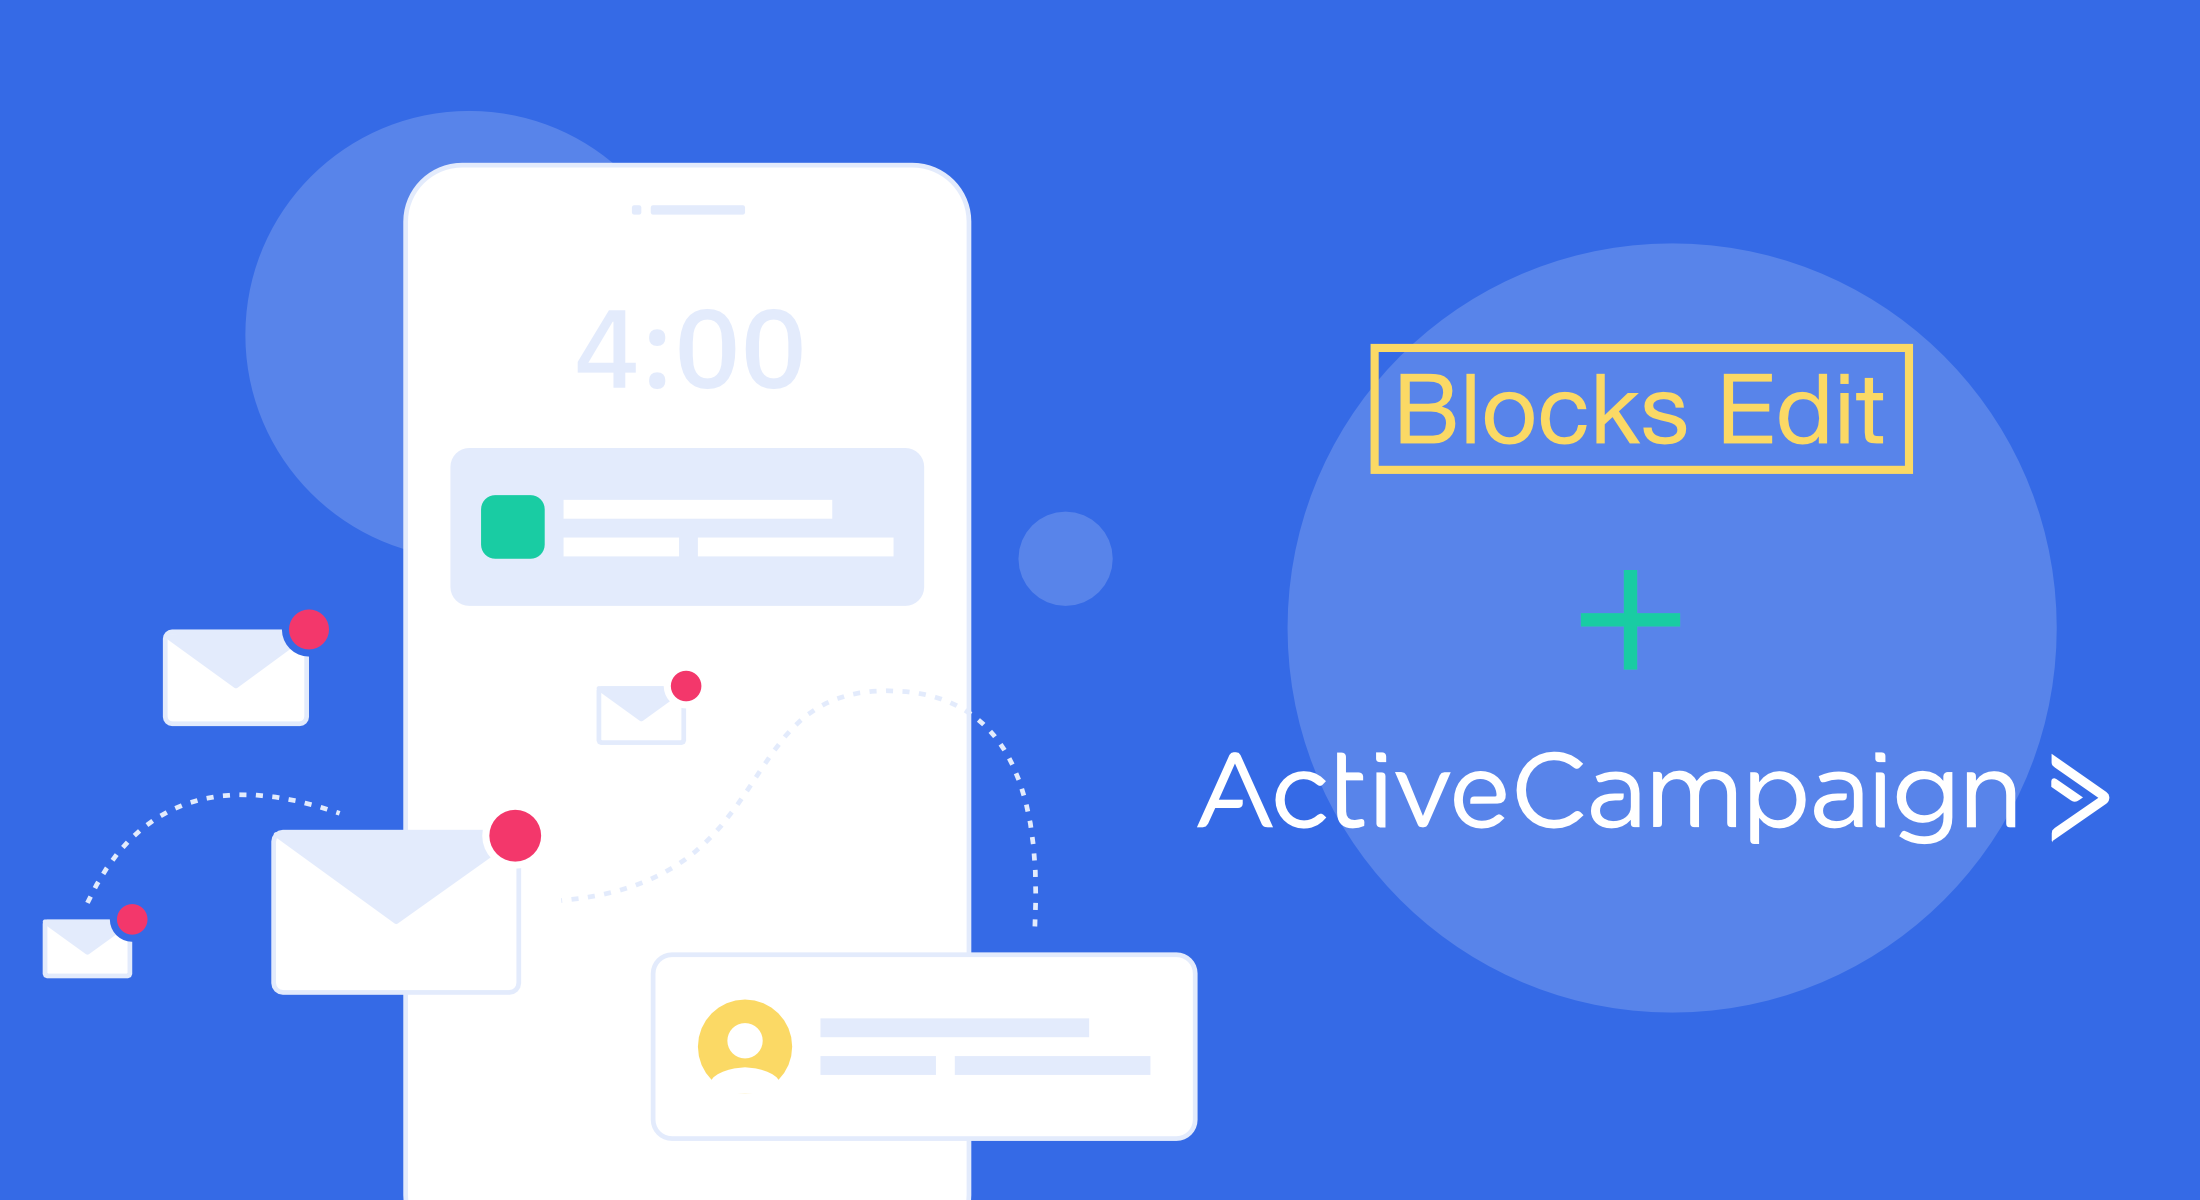 Blocks Edit update: ActiveCampaign integration